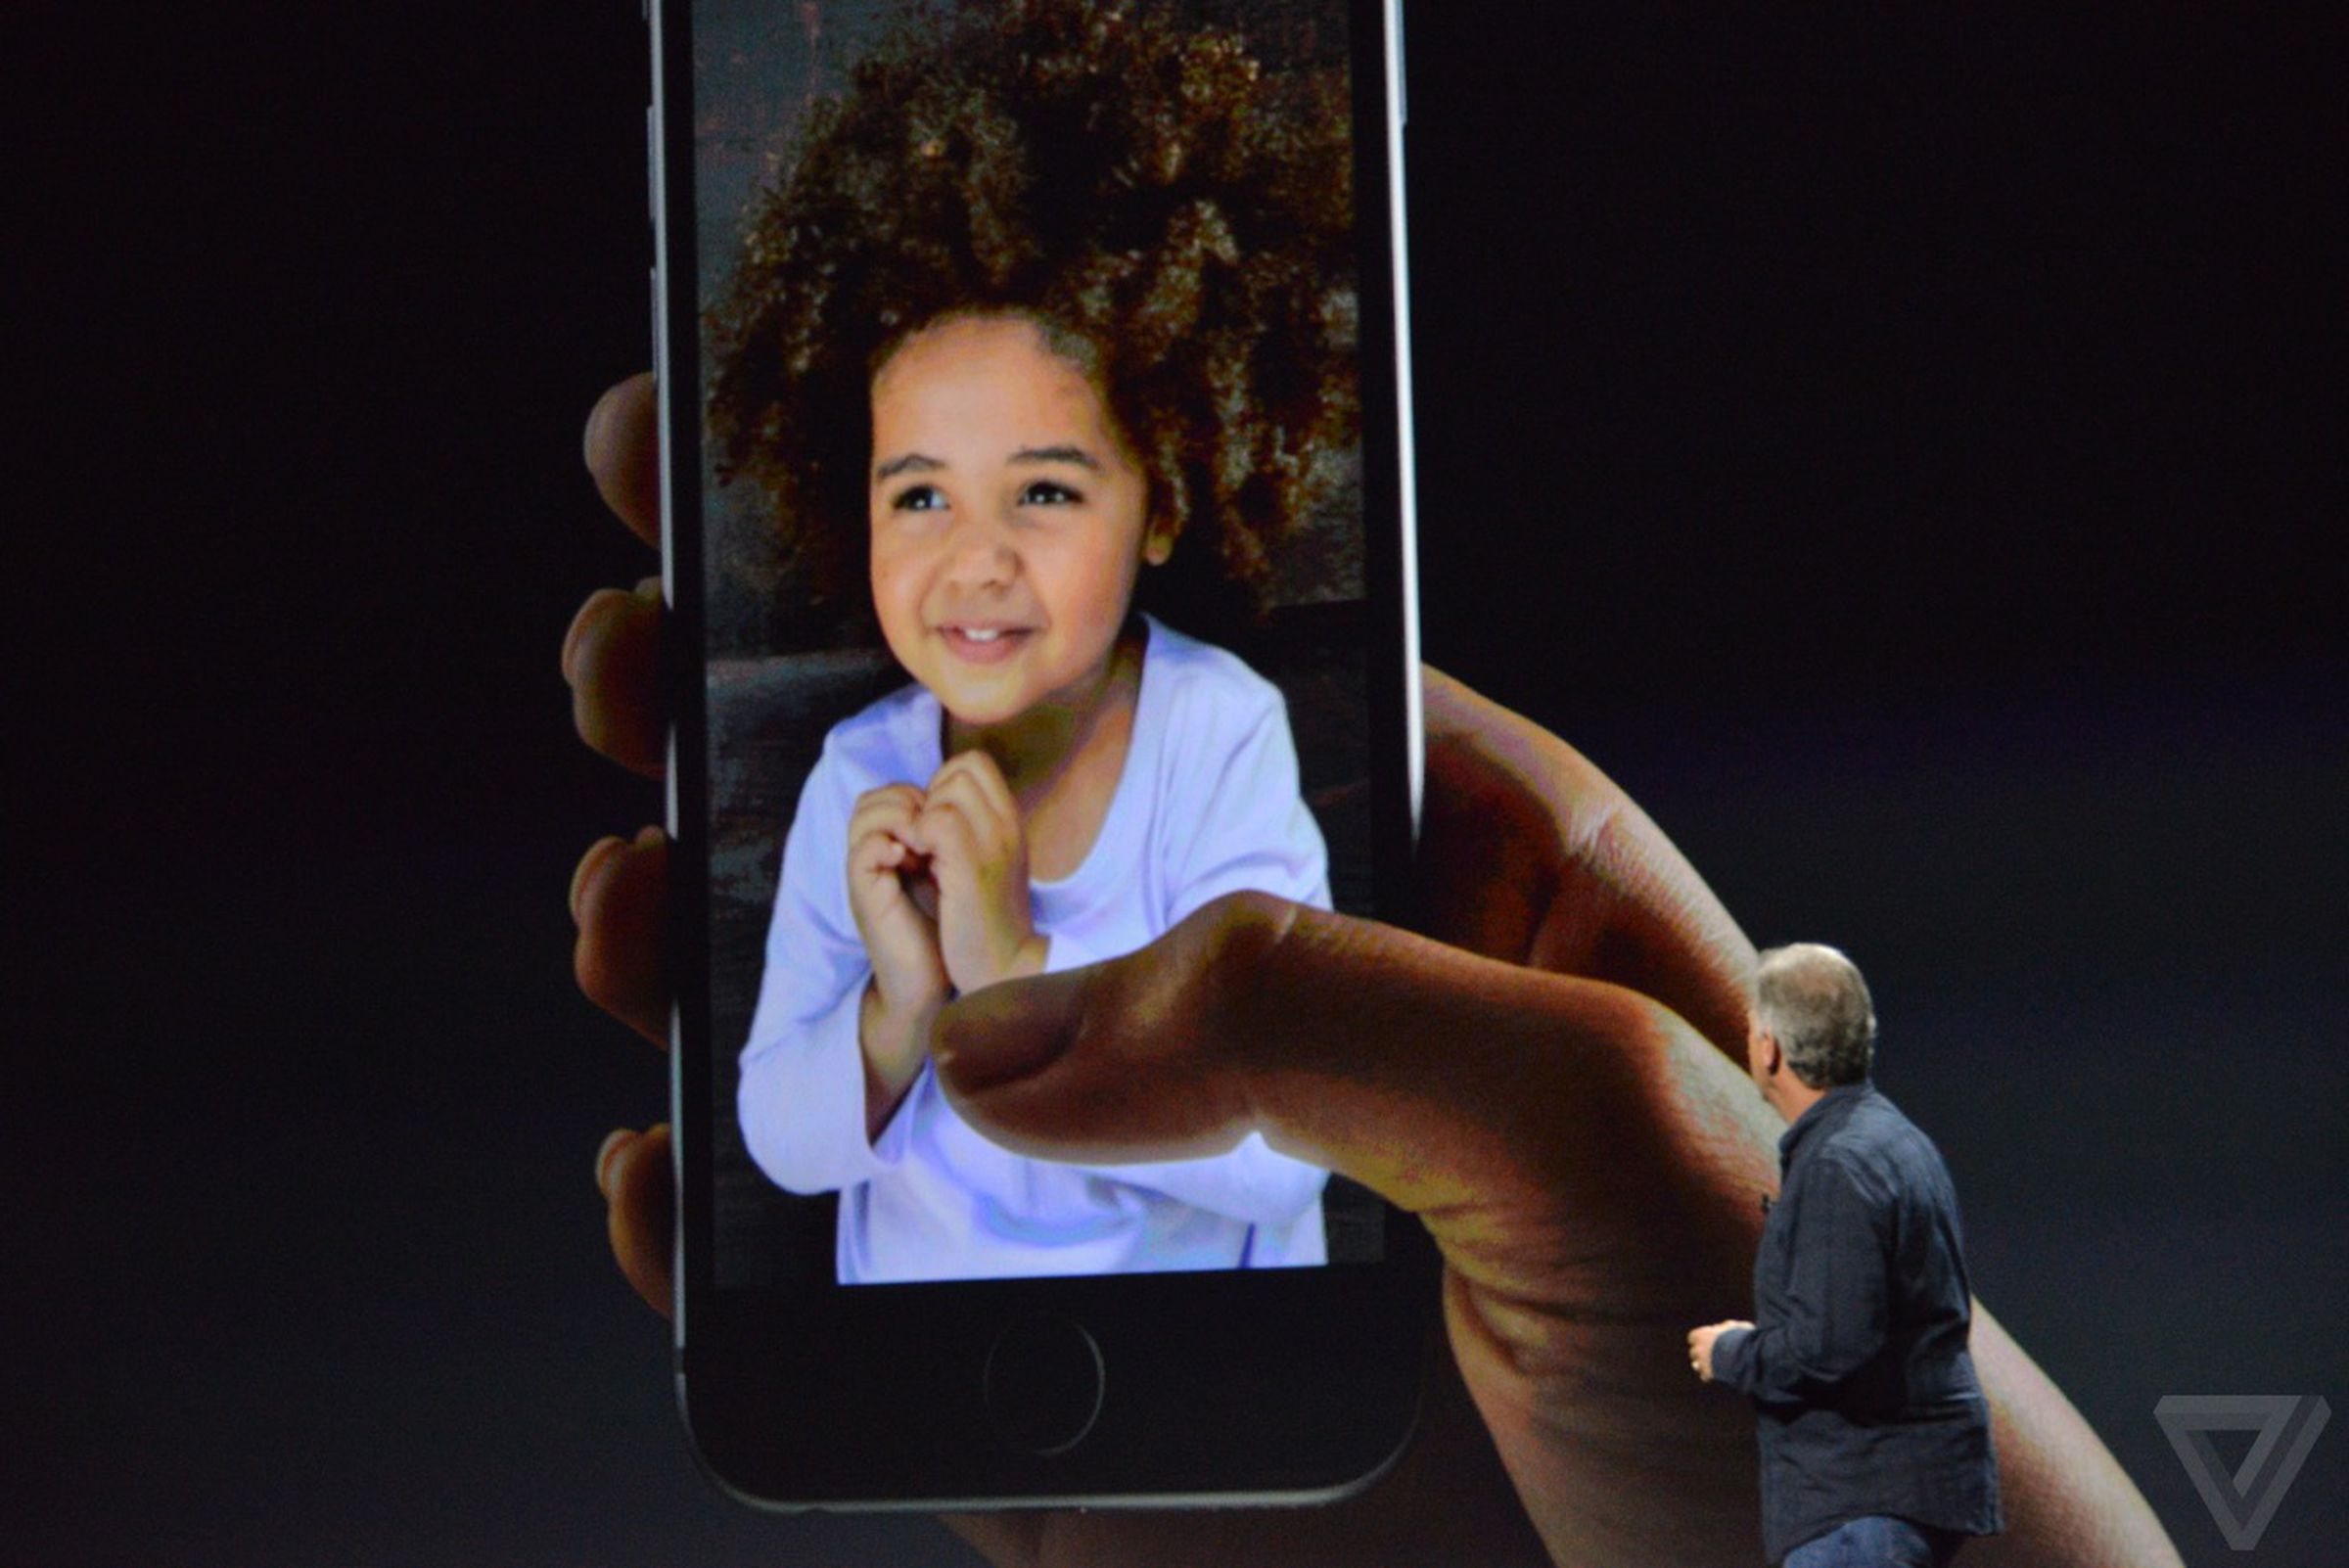 iPhone 6S announcement photos